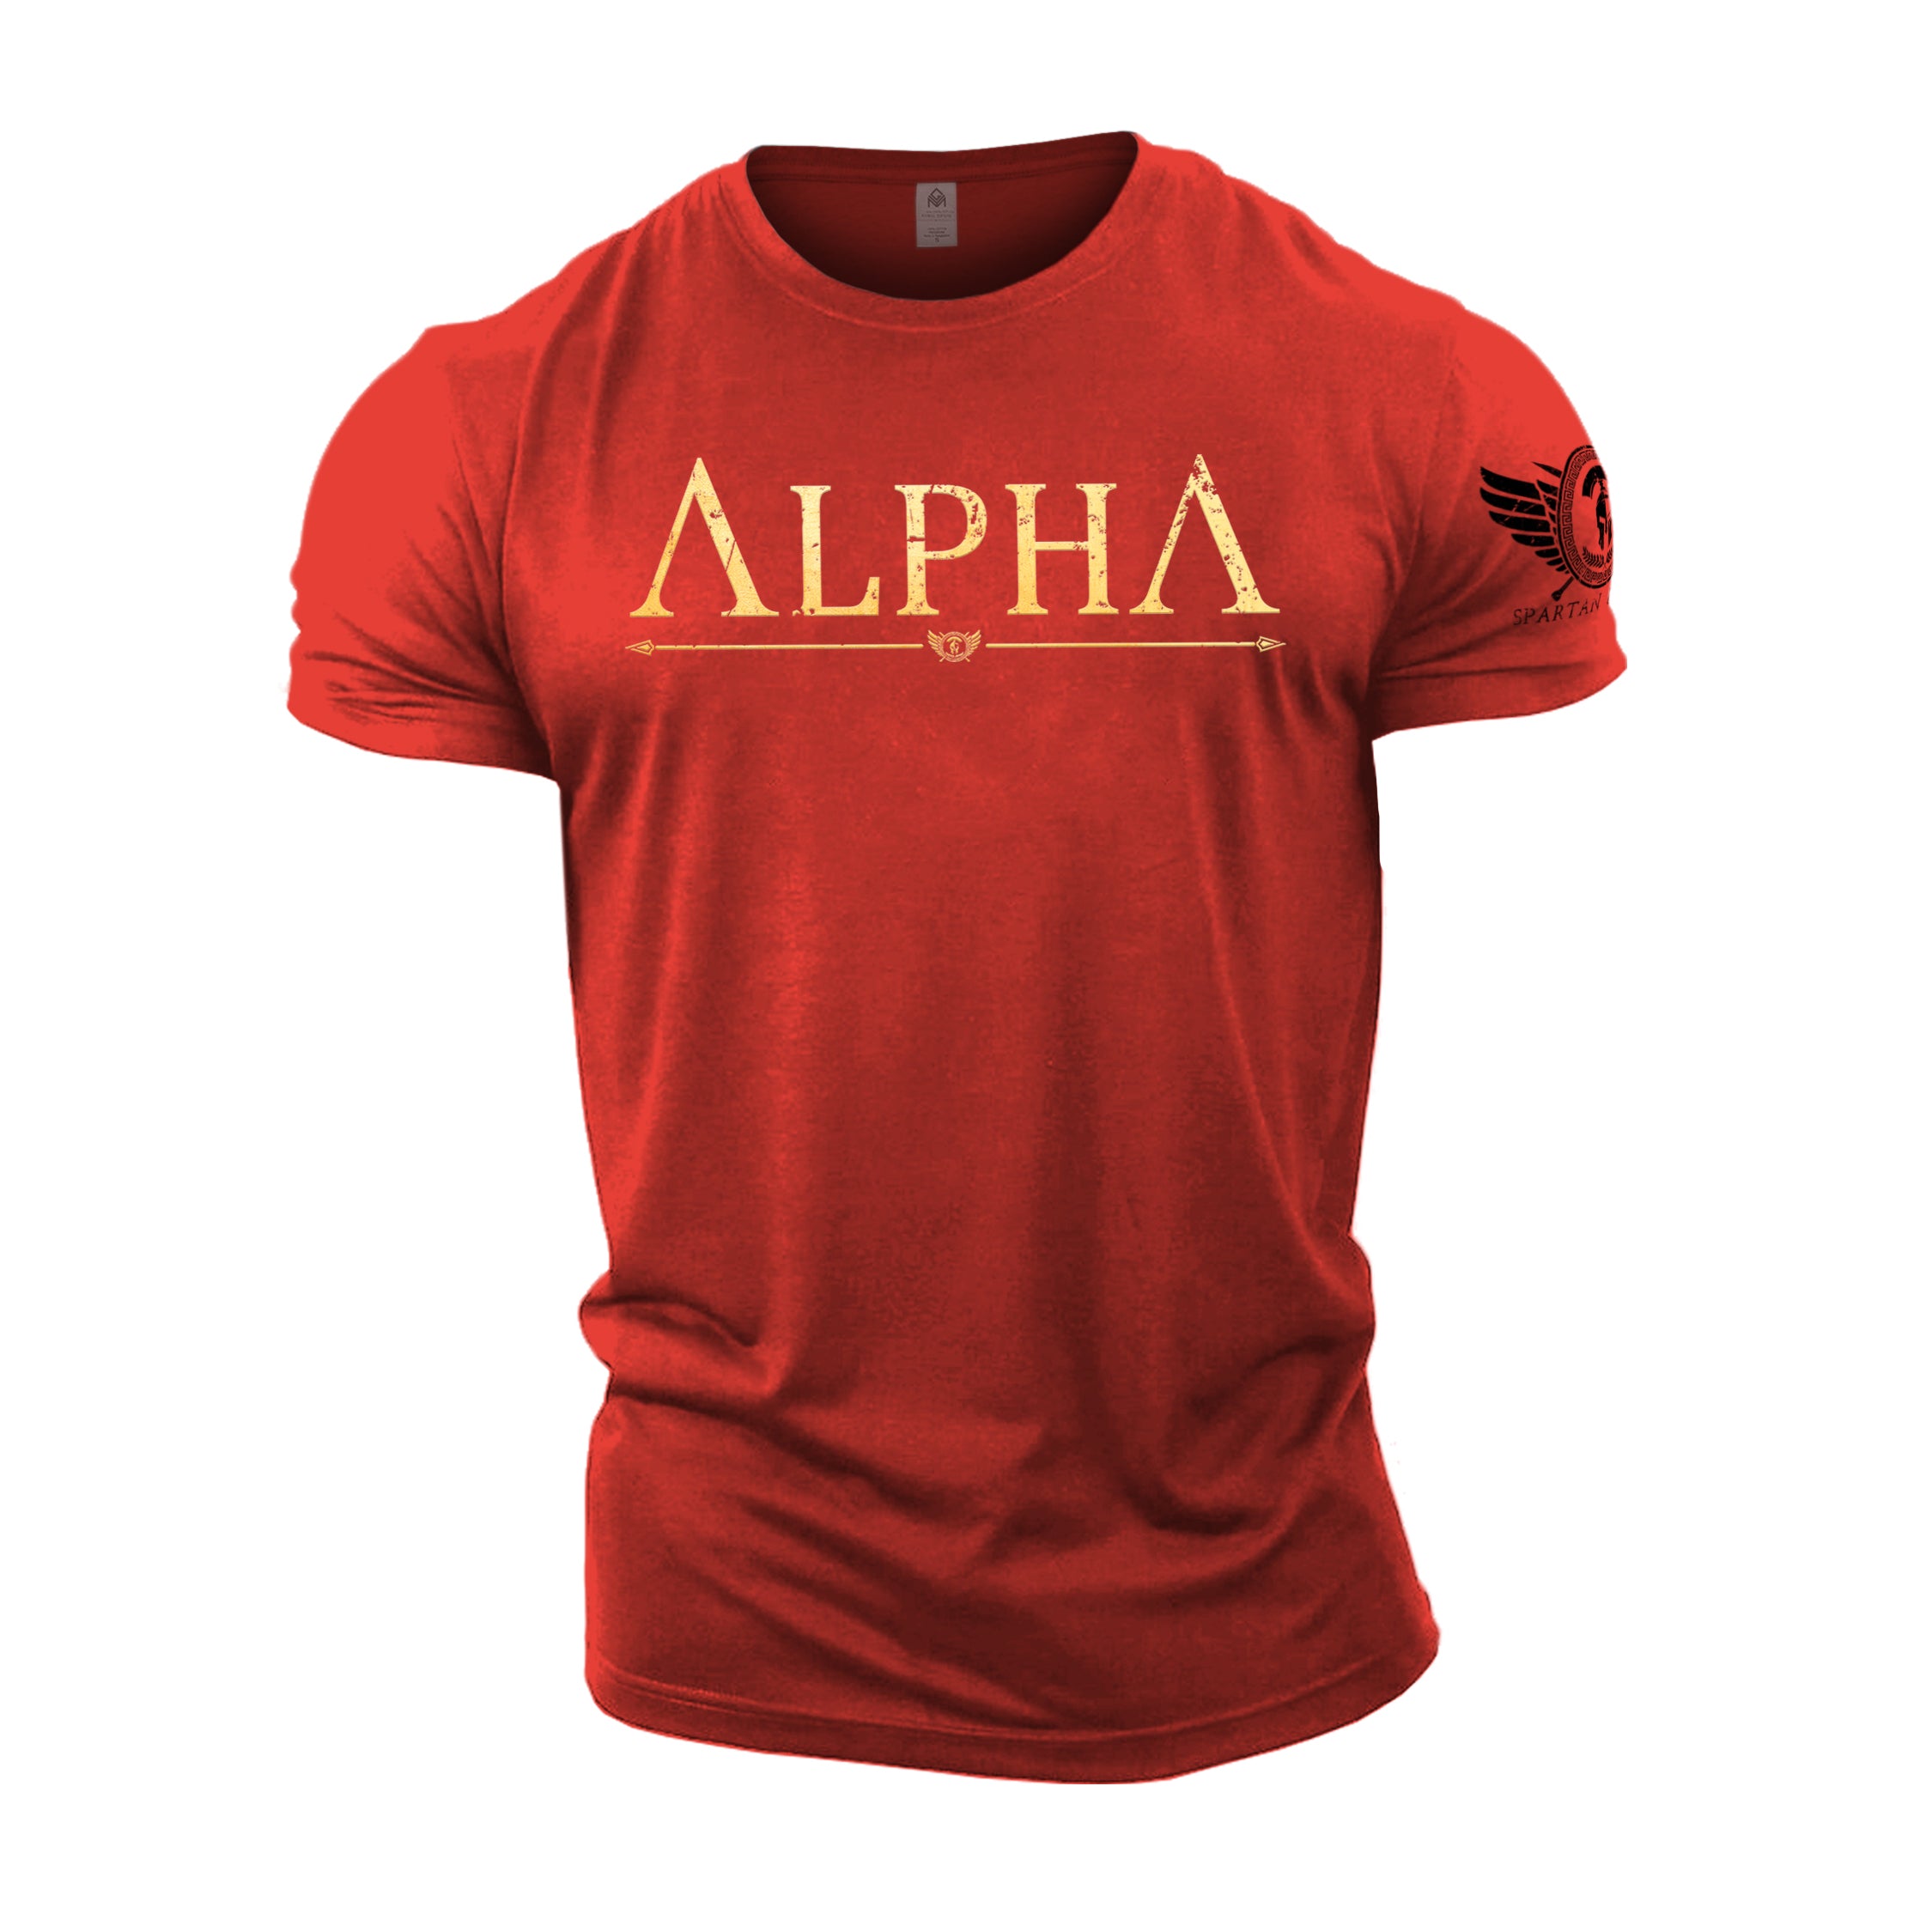 ALPHA Gold - Spartan Forged - Gym T-Shirt